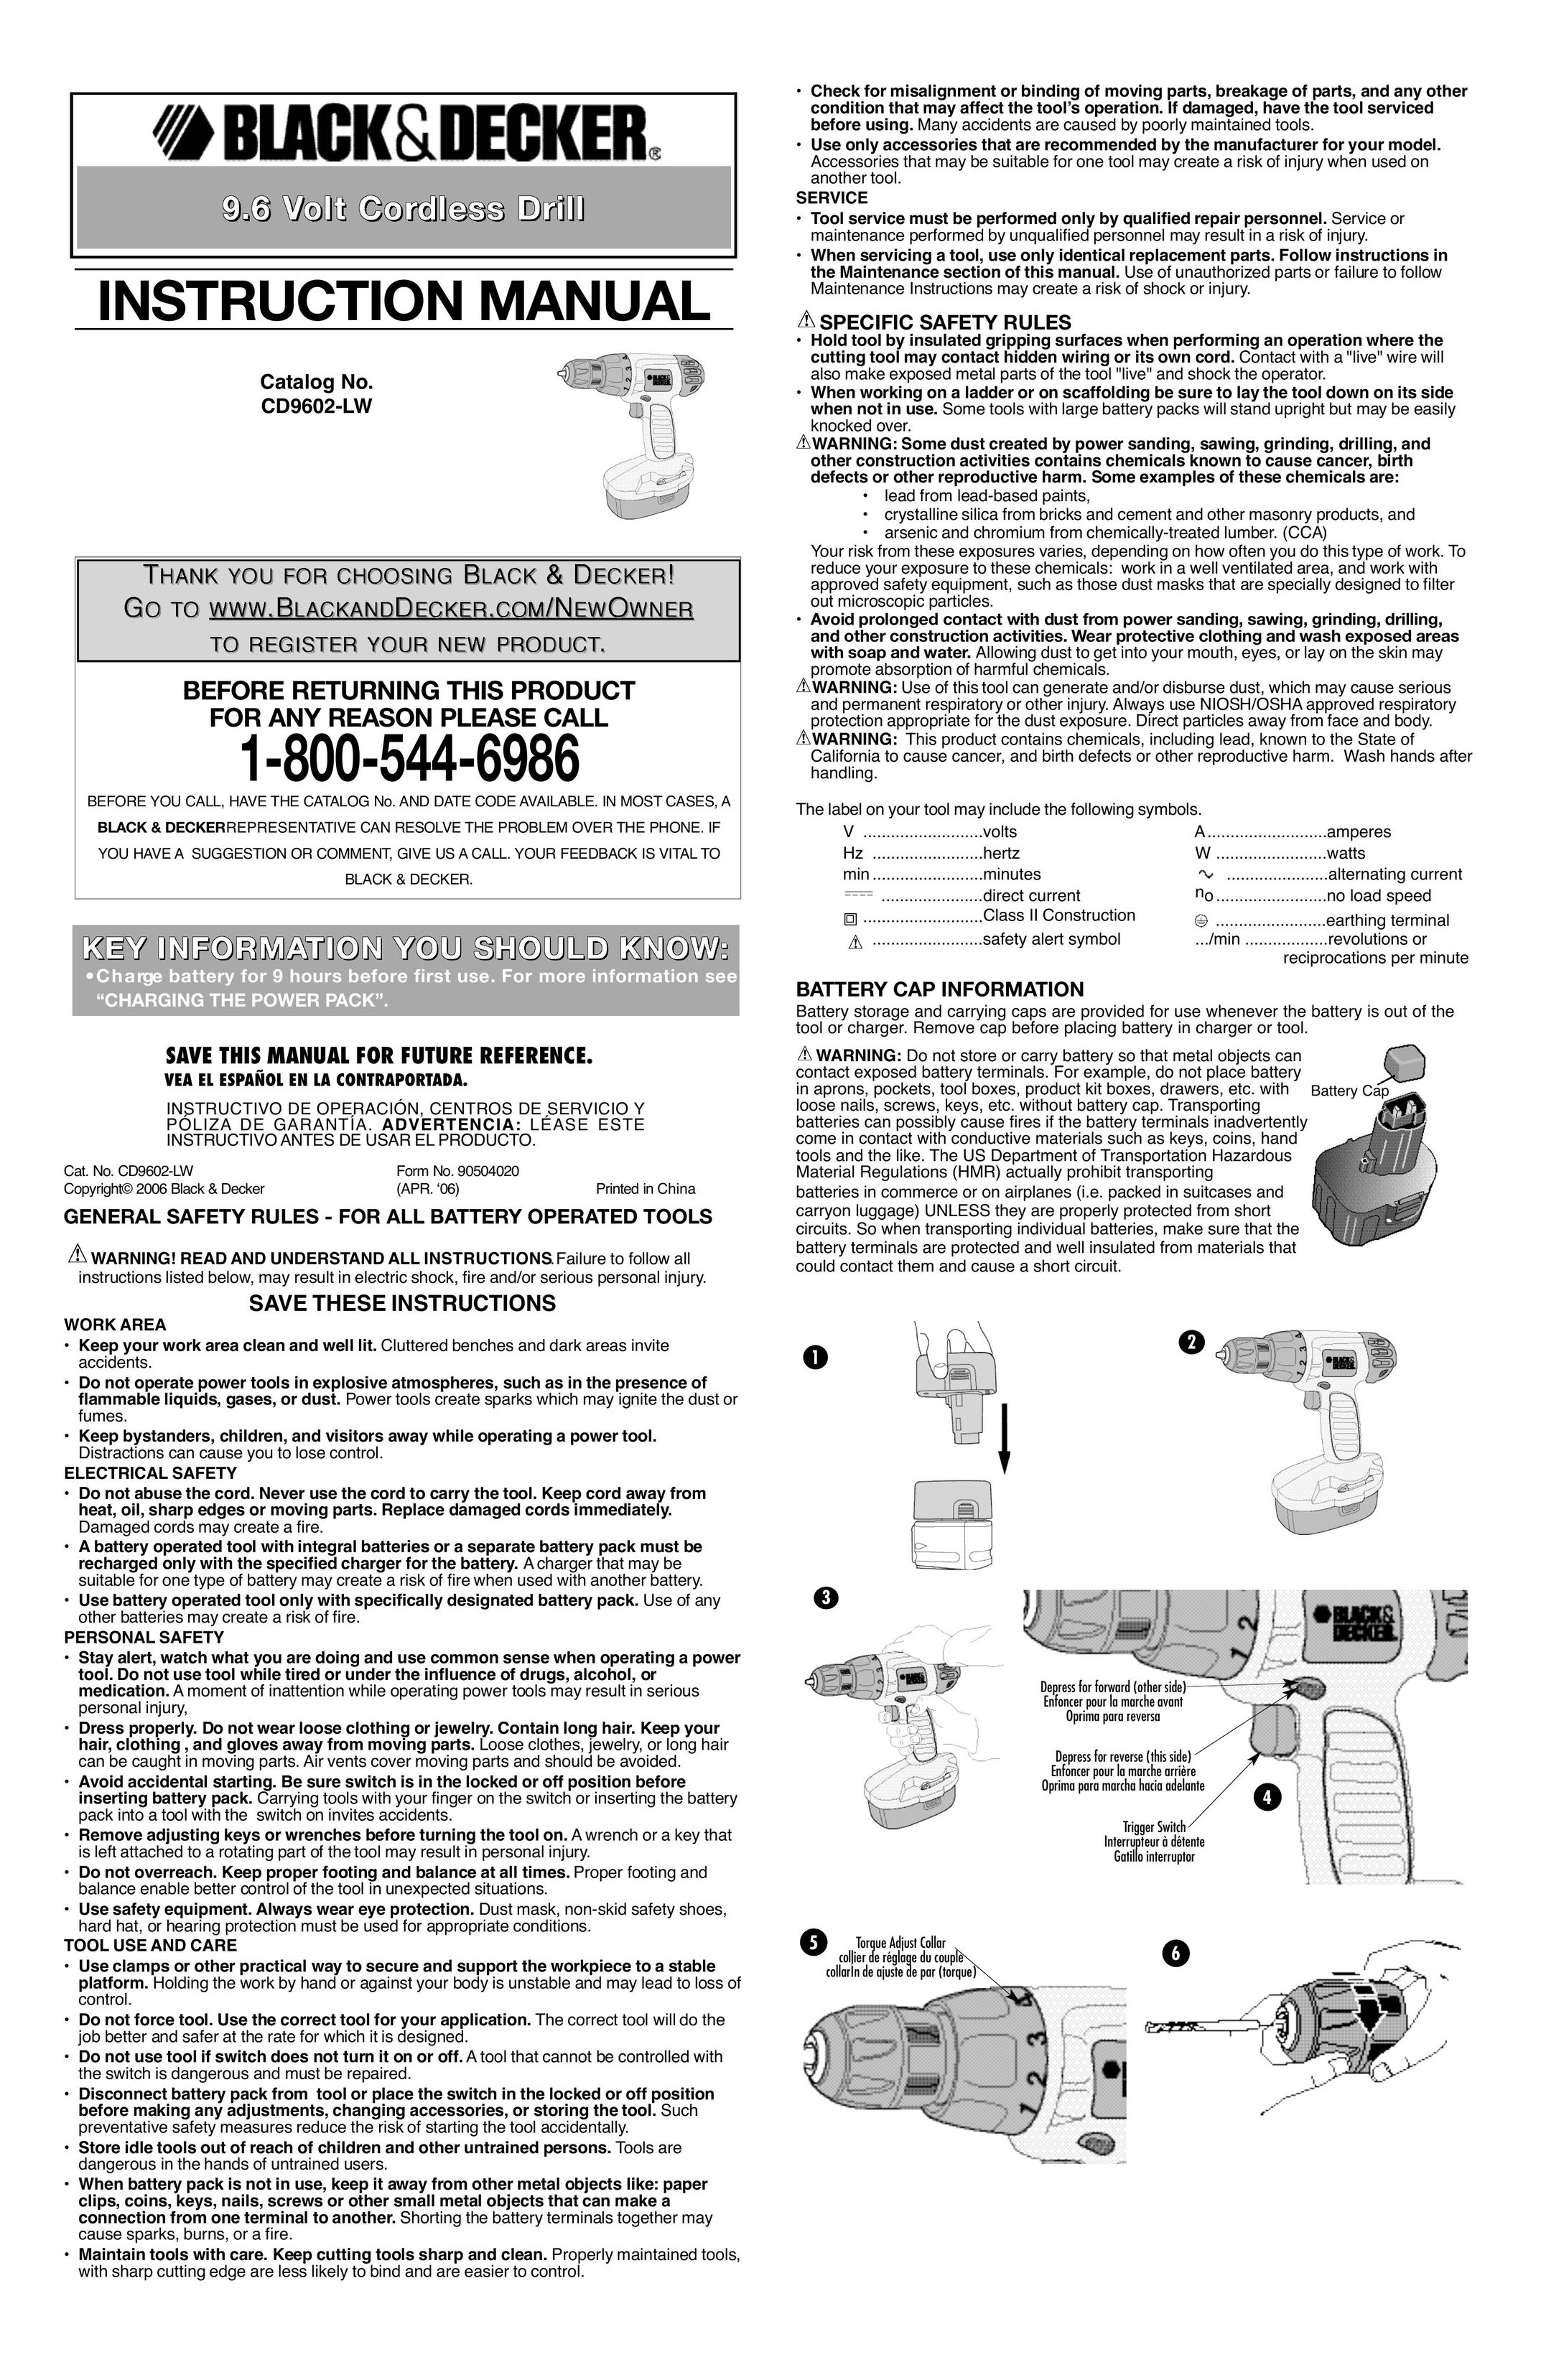 Black & Decker 90504020 Cordless Drill User Manual